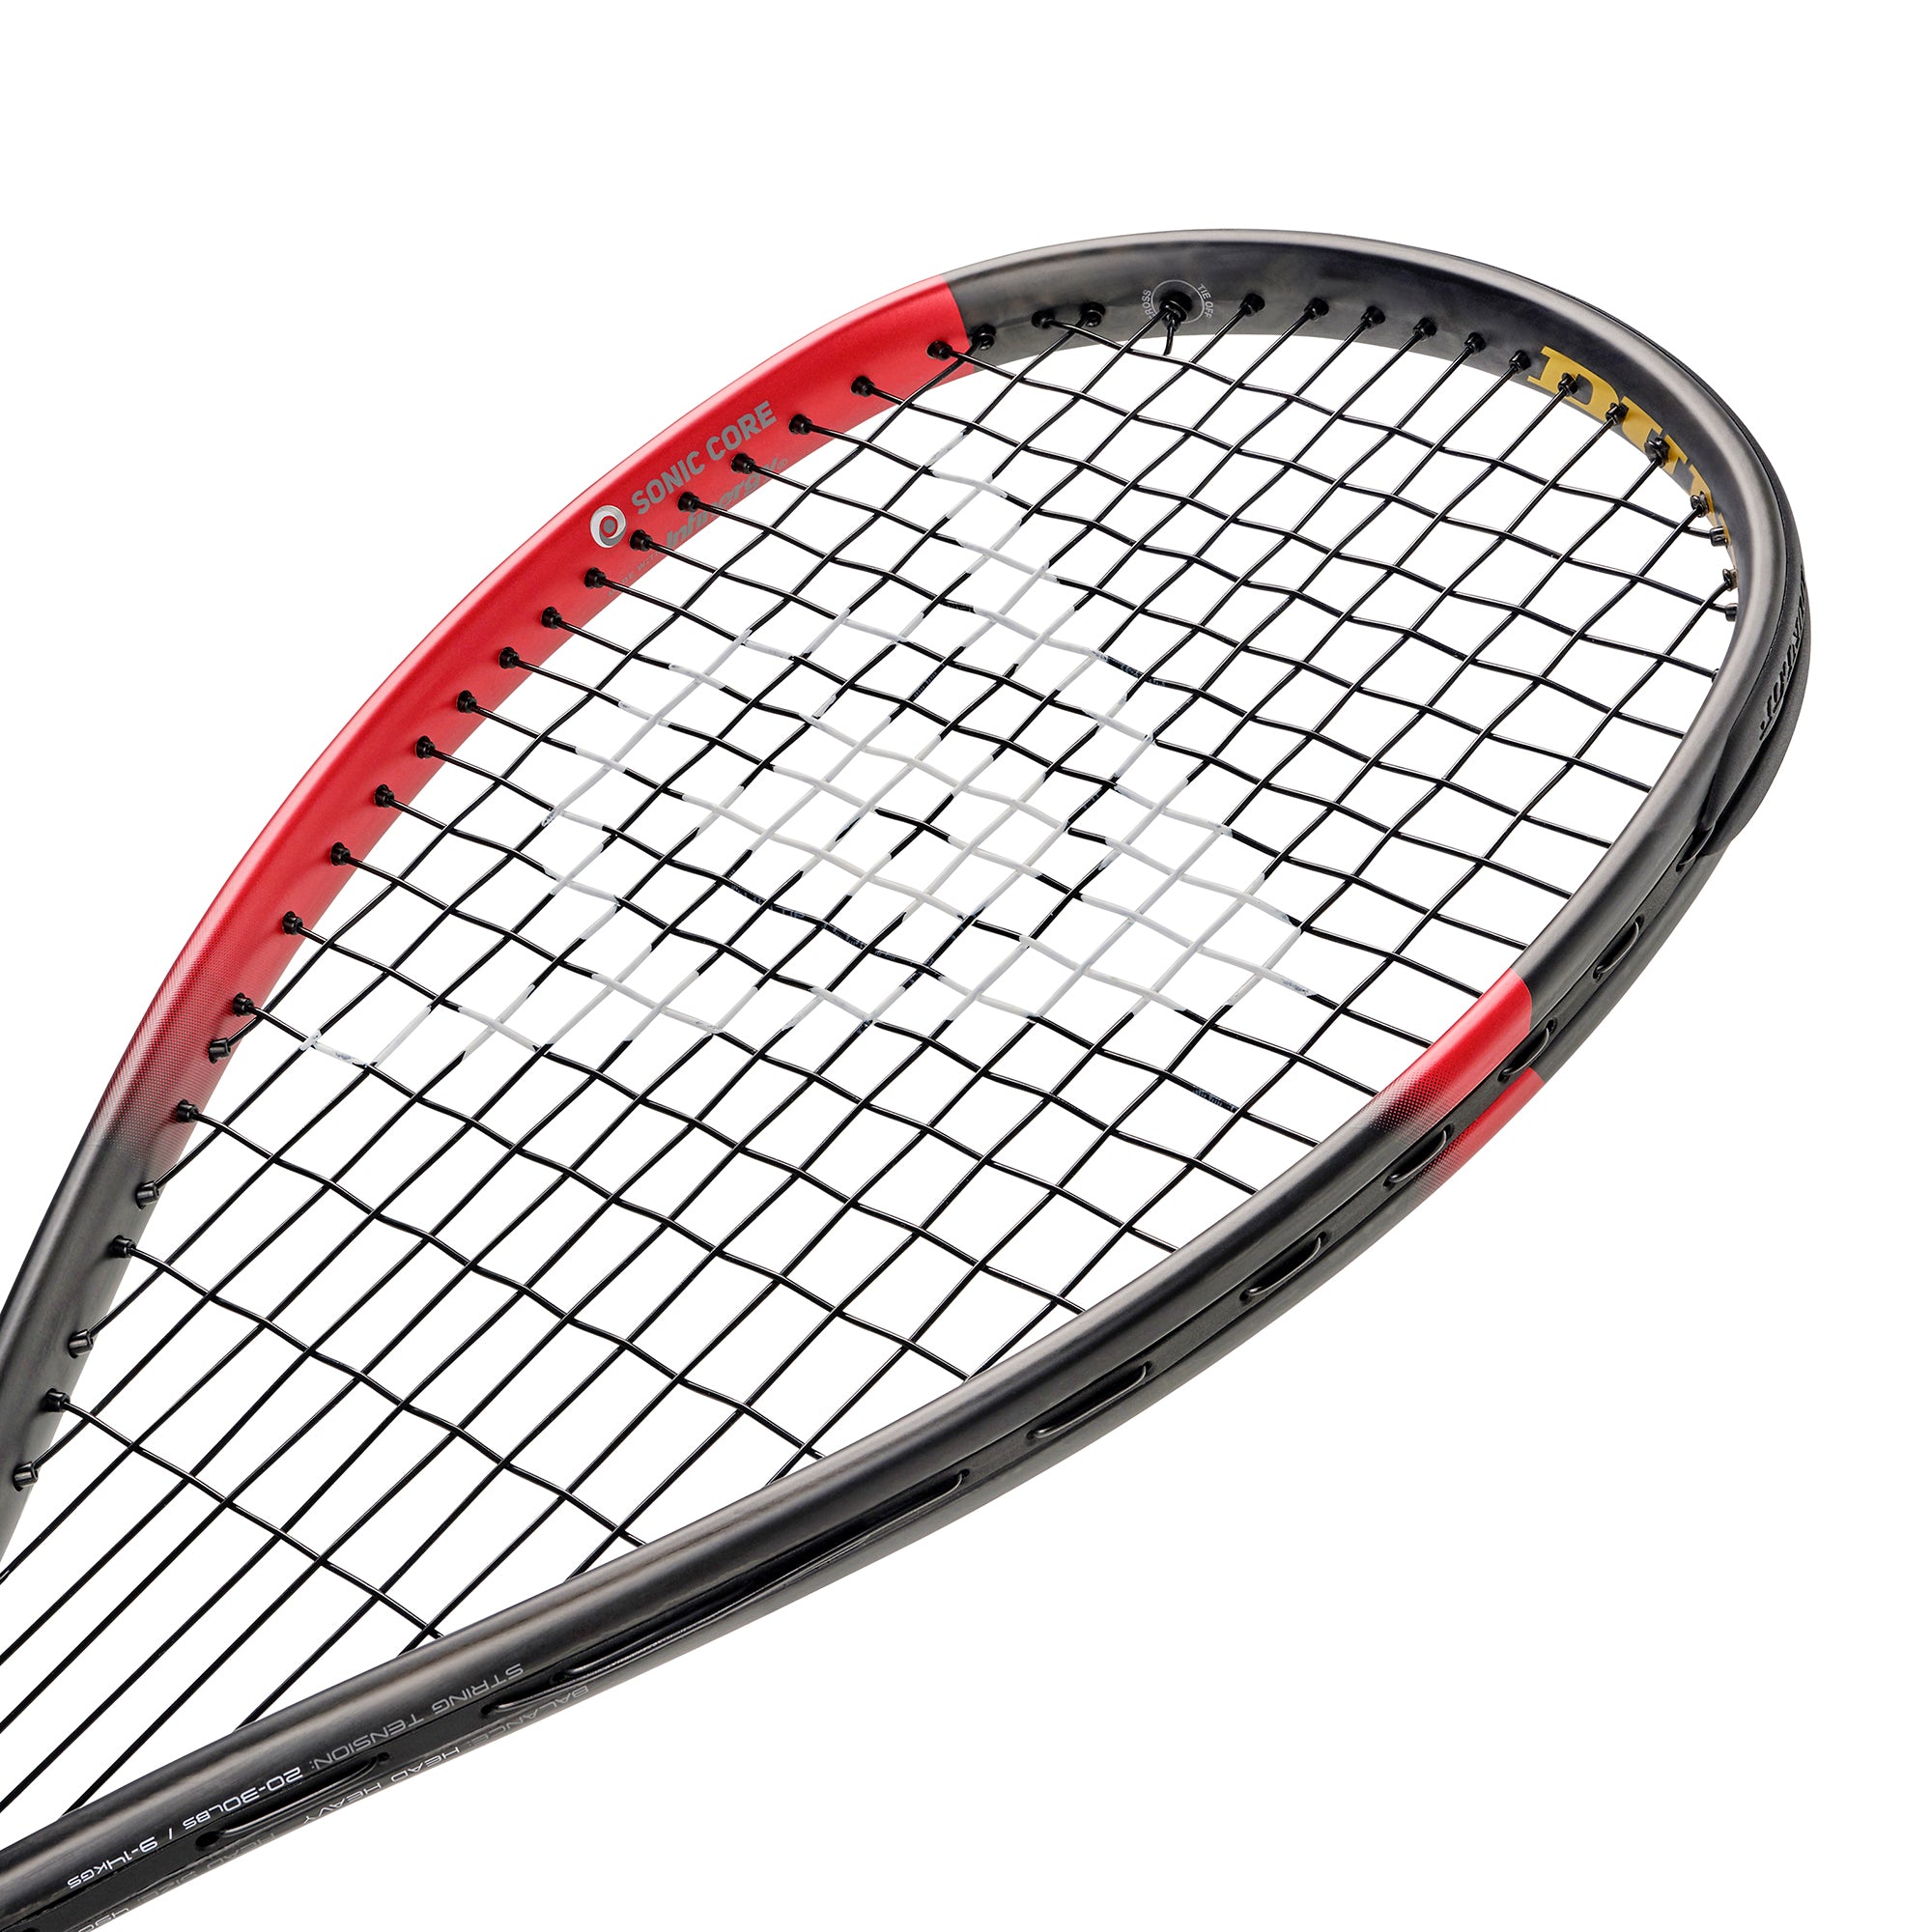 Dunlop Revelation Pro Squash Racket